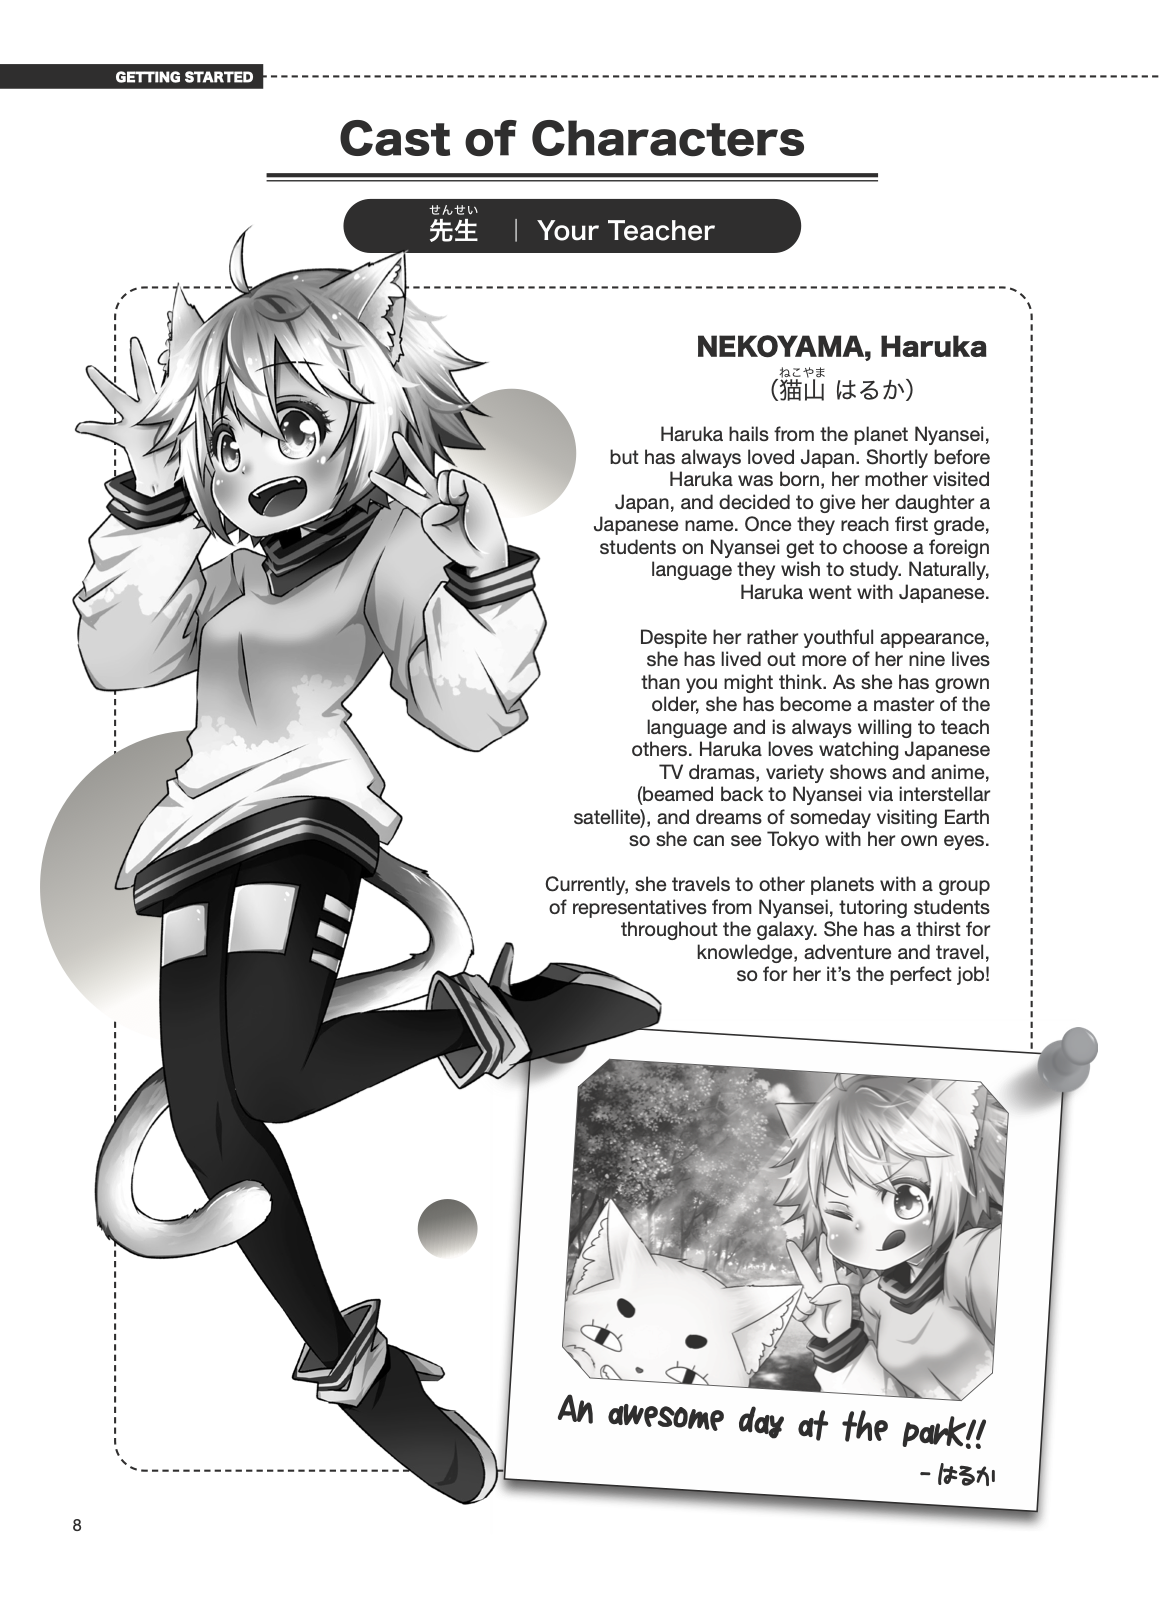 Manga University Home Study Course – MANGA UNIVERSITY CAMPUS STORE